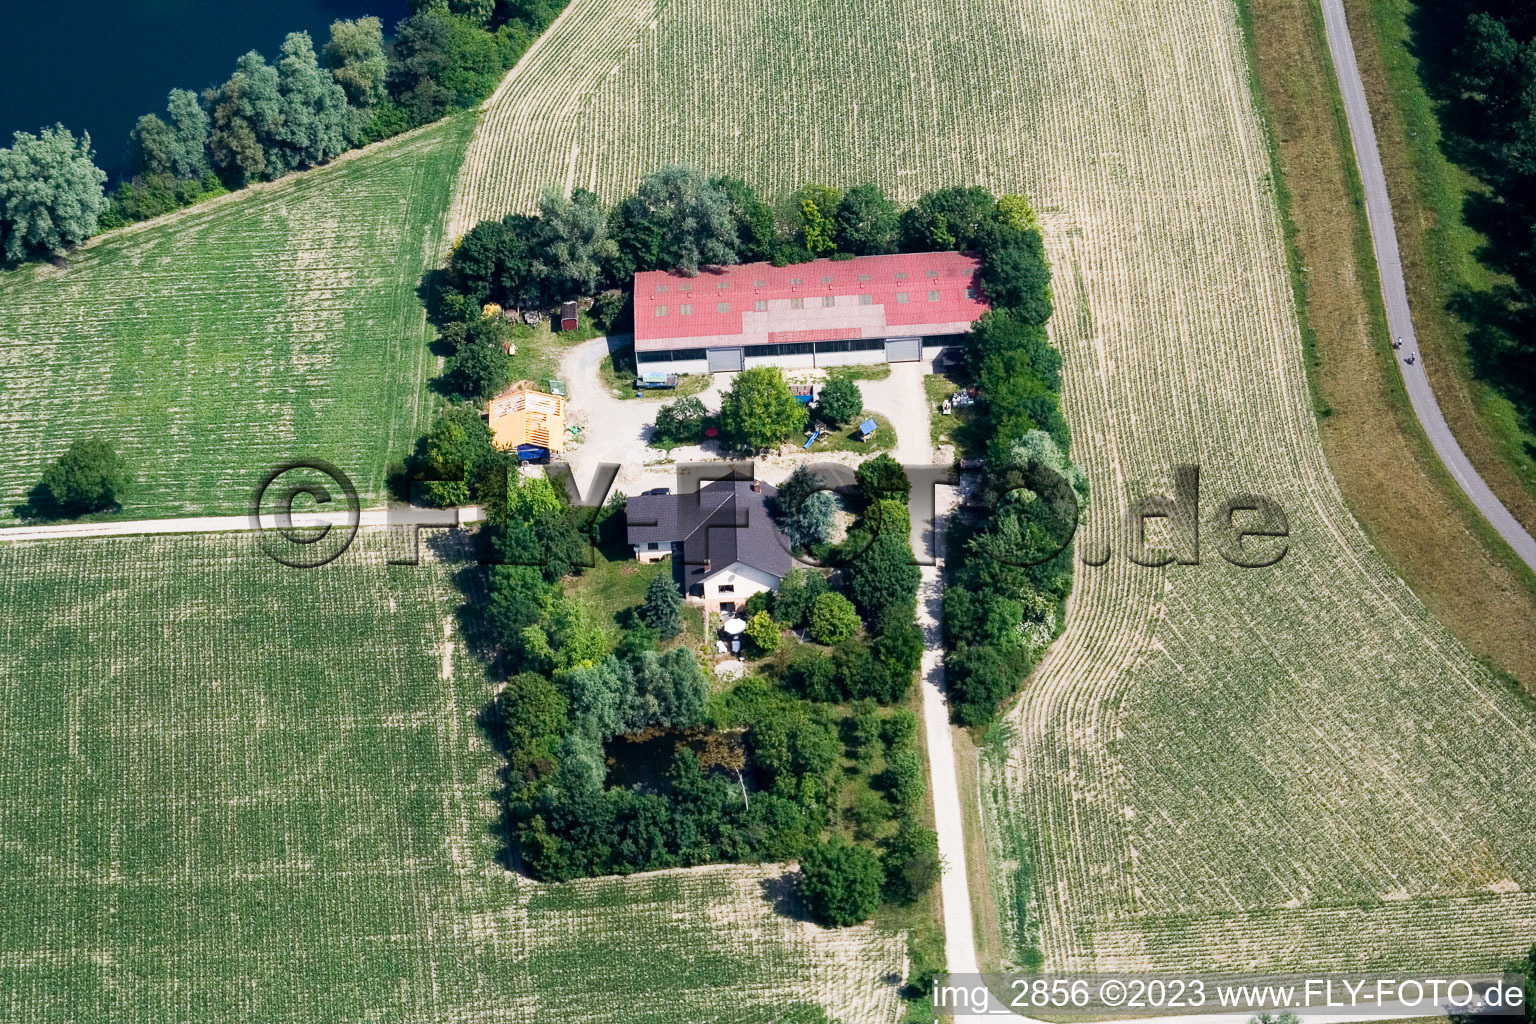 Seehof (corn maze) in Leimersheim in the state Rhineland-Palatinate, Germany